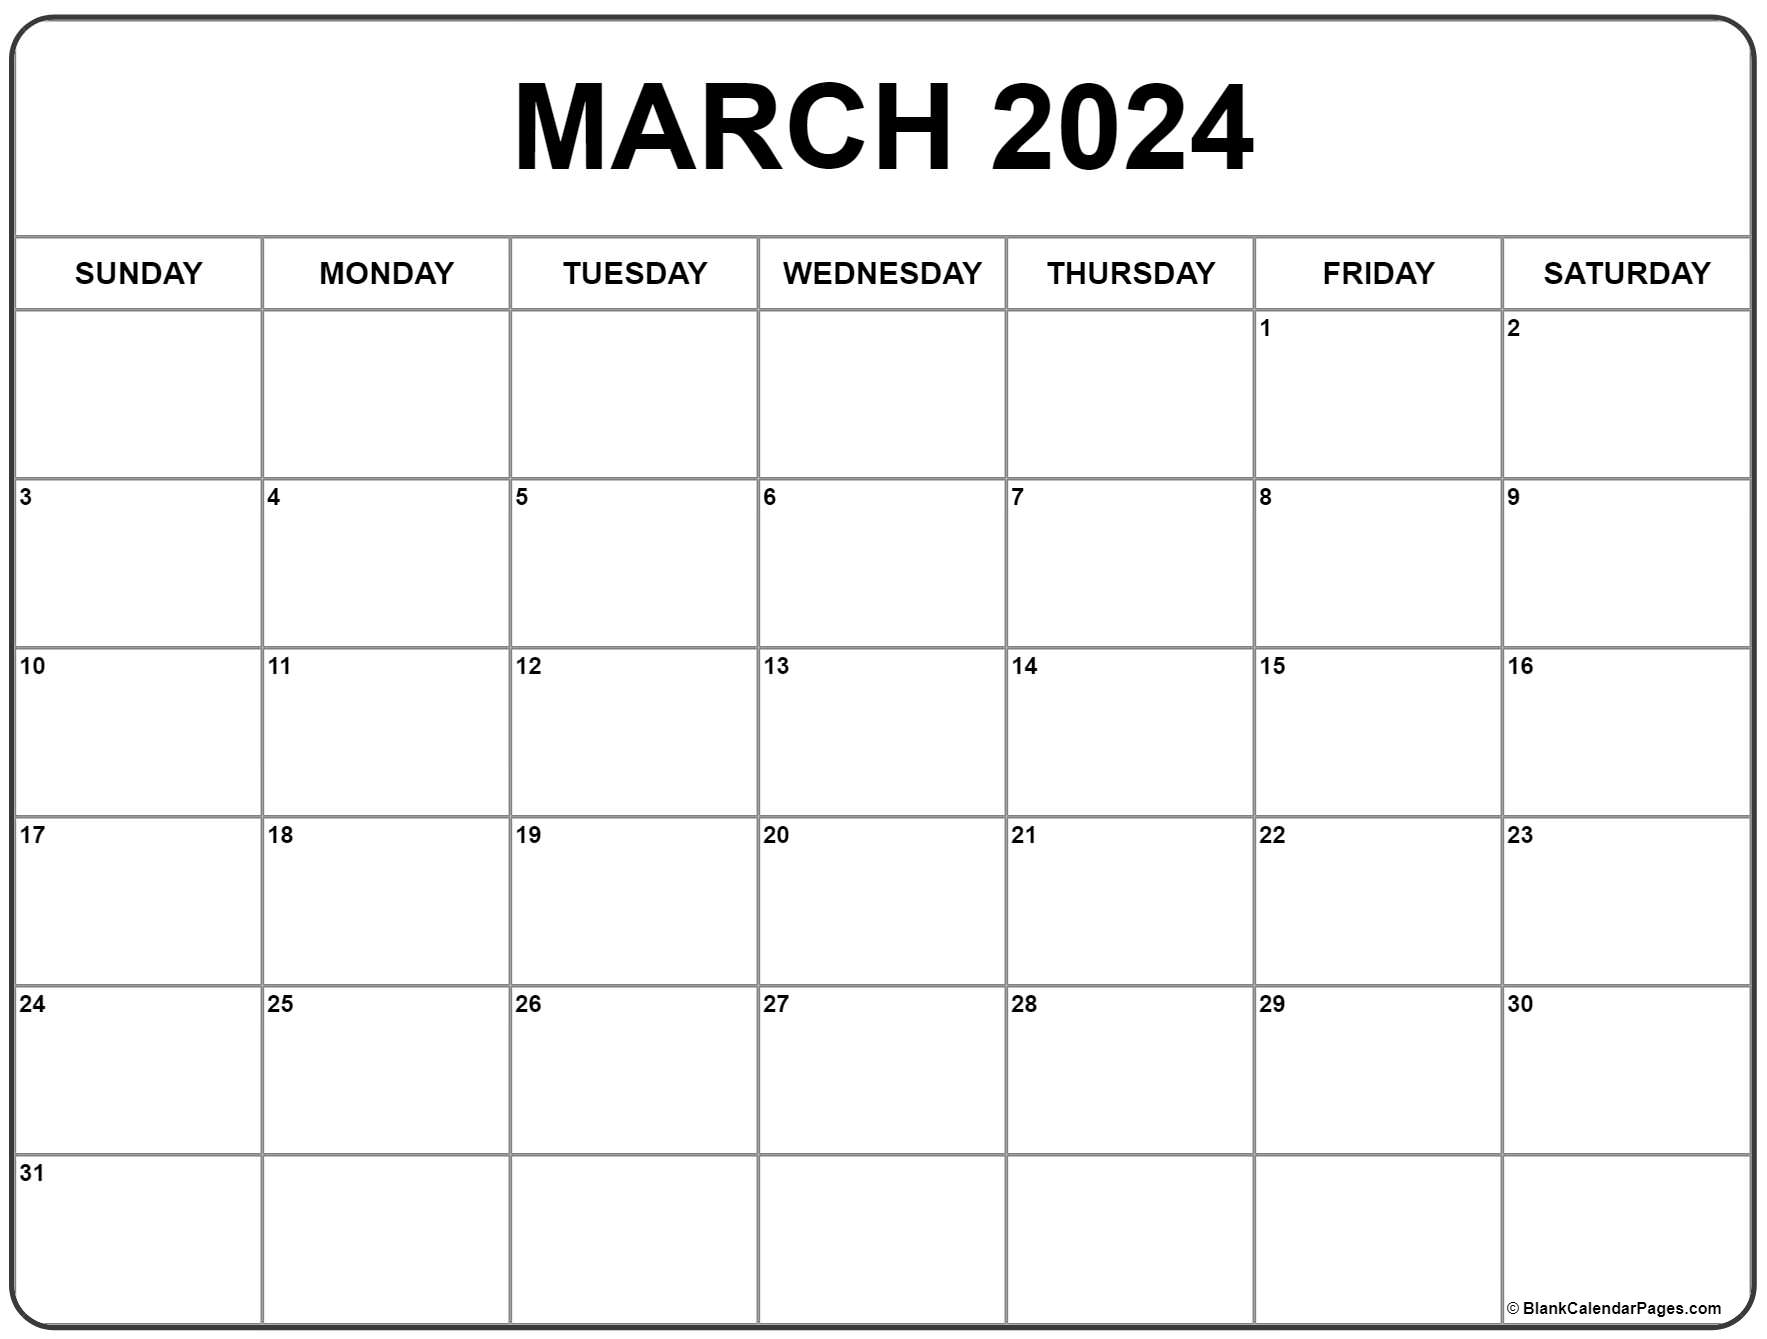 March 2024 Calendar | Free Printable Calendar for Calendar 2024 Printable Free March